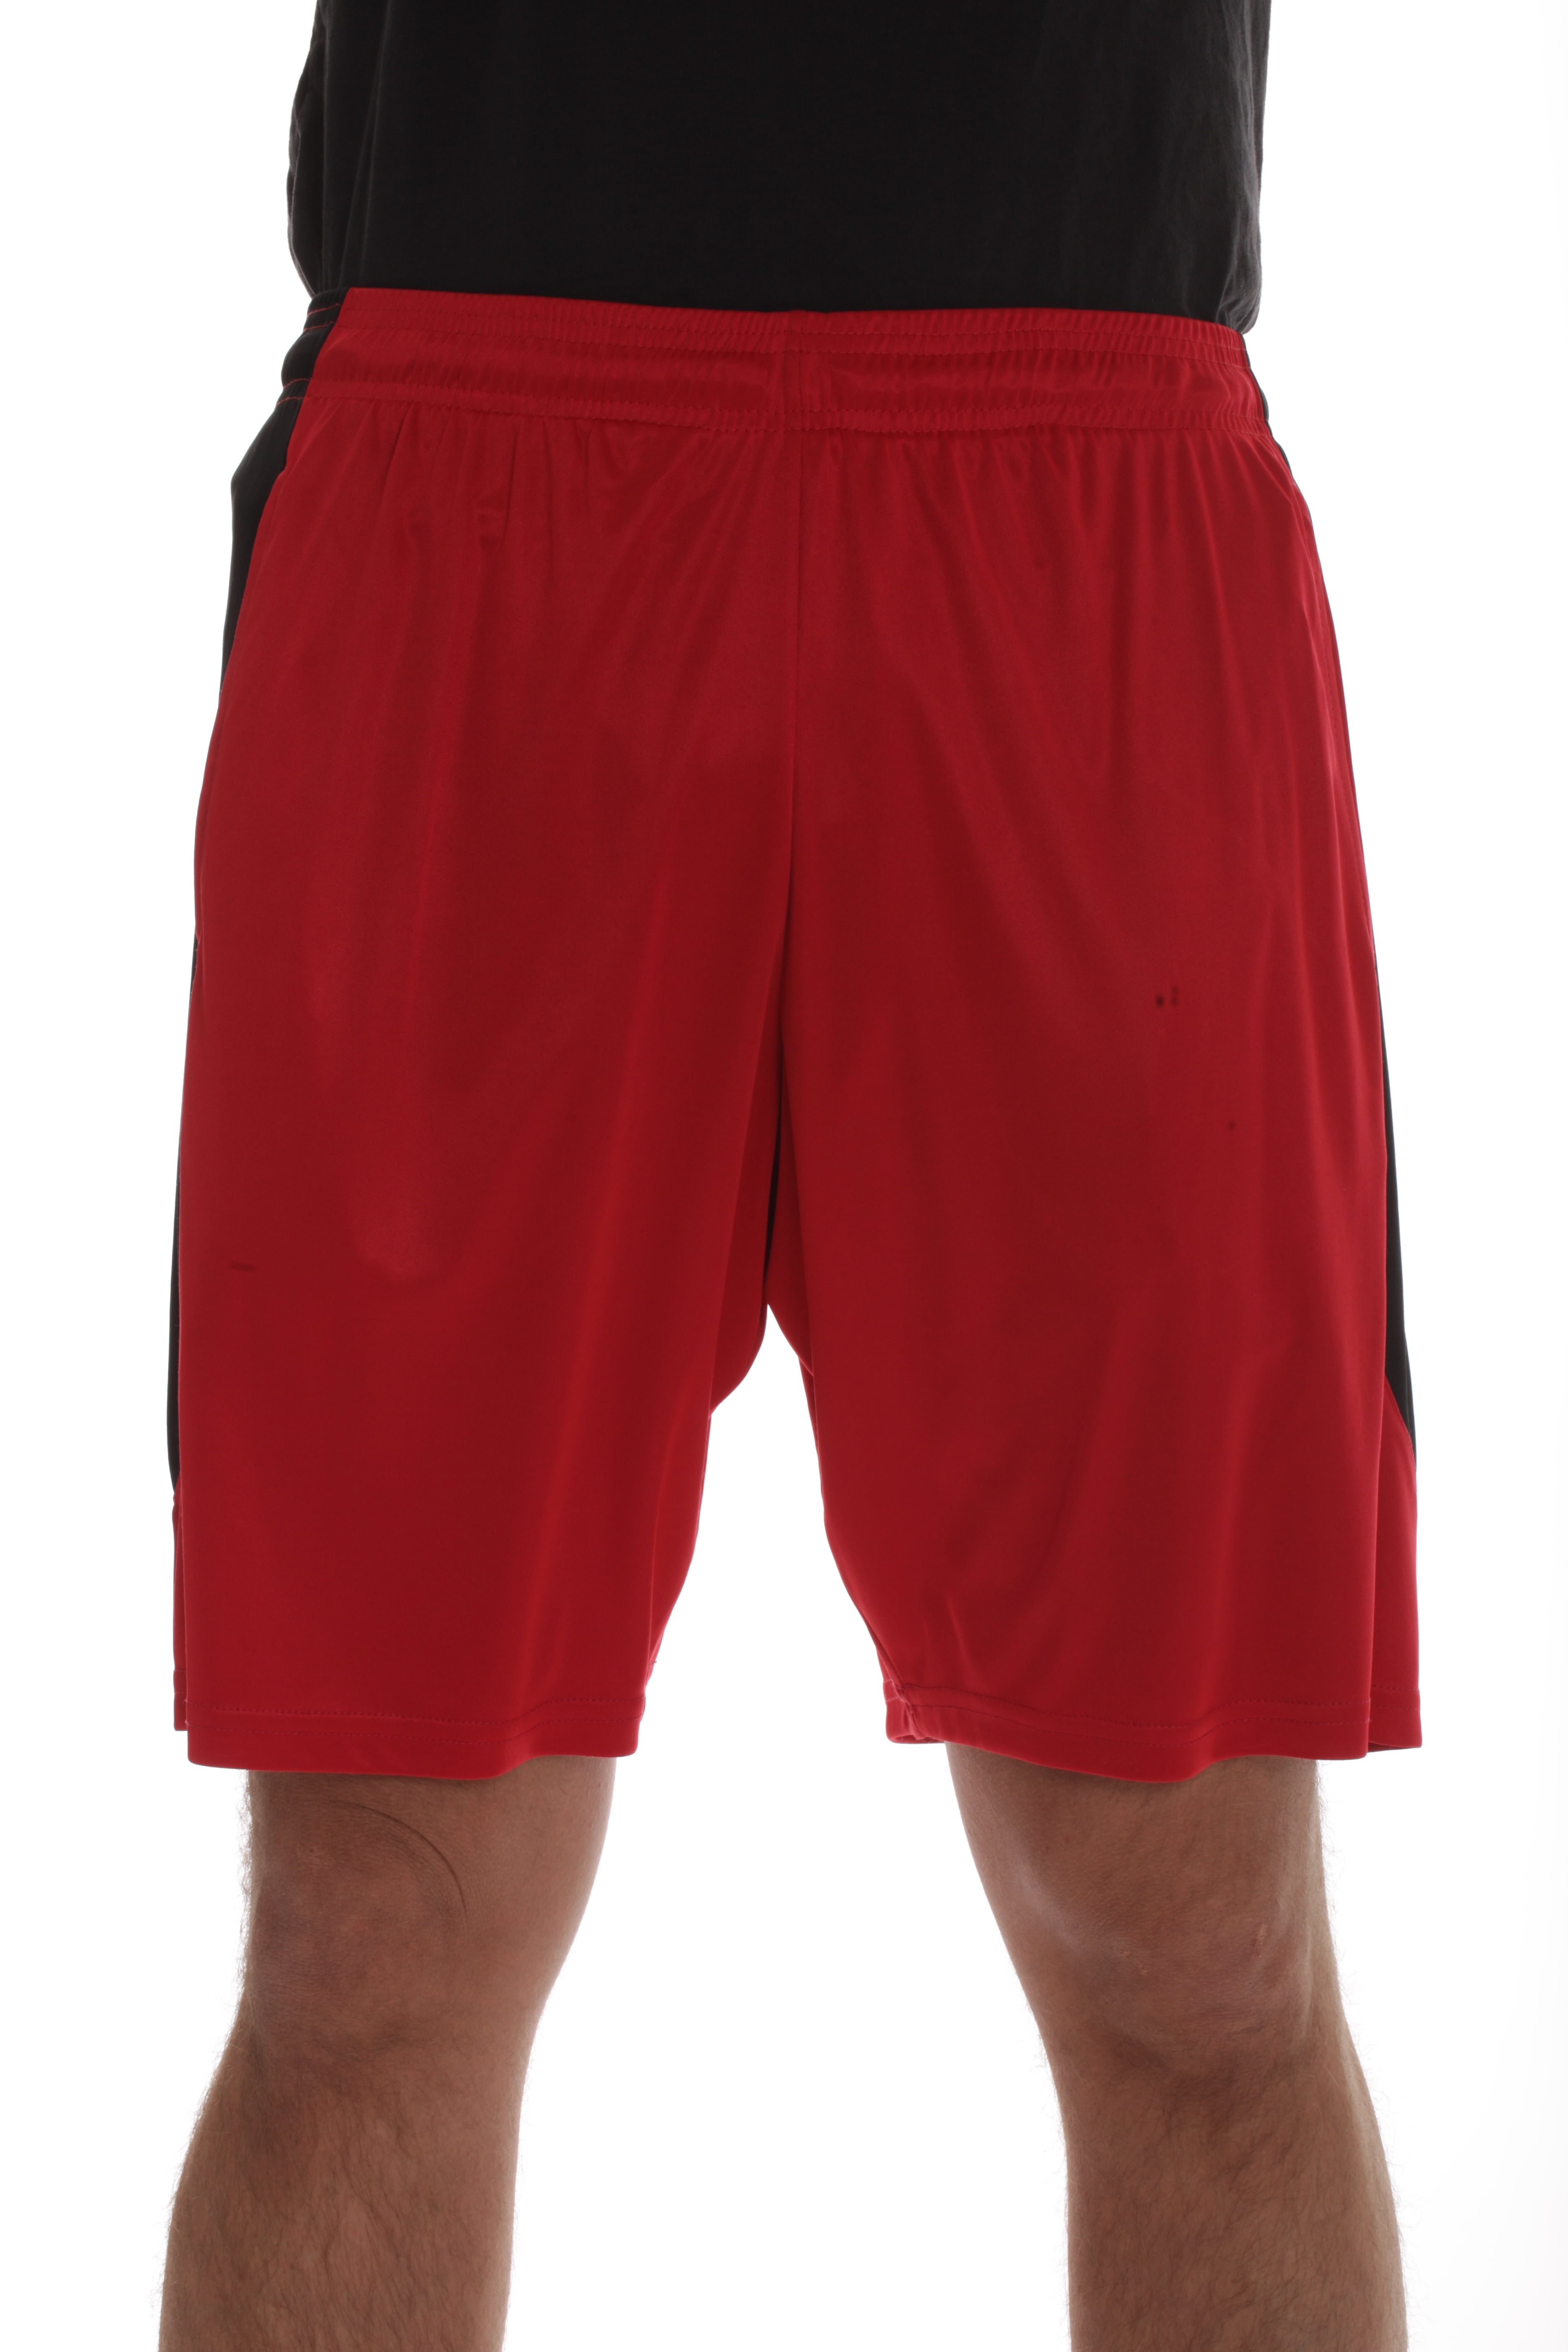 ZeroXposur Performance Athletic Lounge Shorts Boys Choose Size & Color NWT $36 